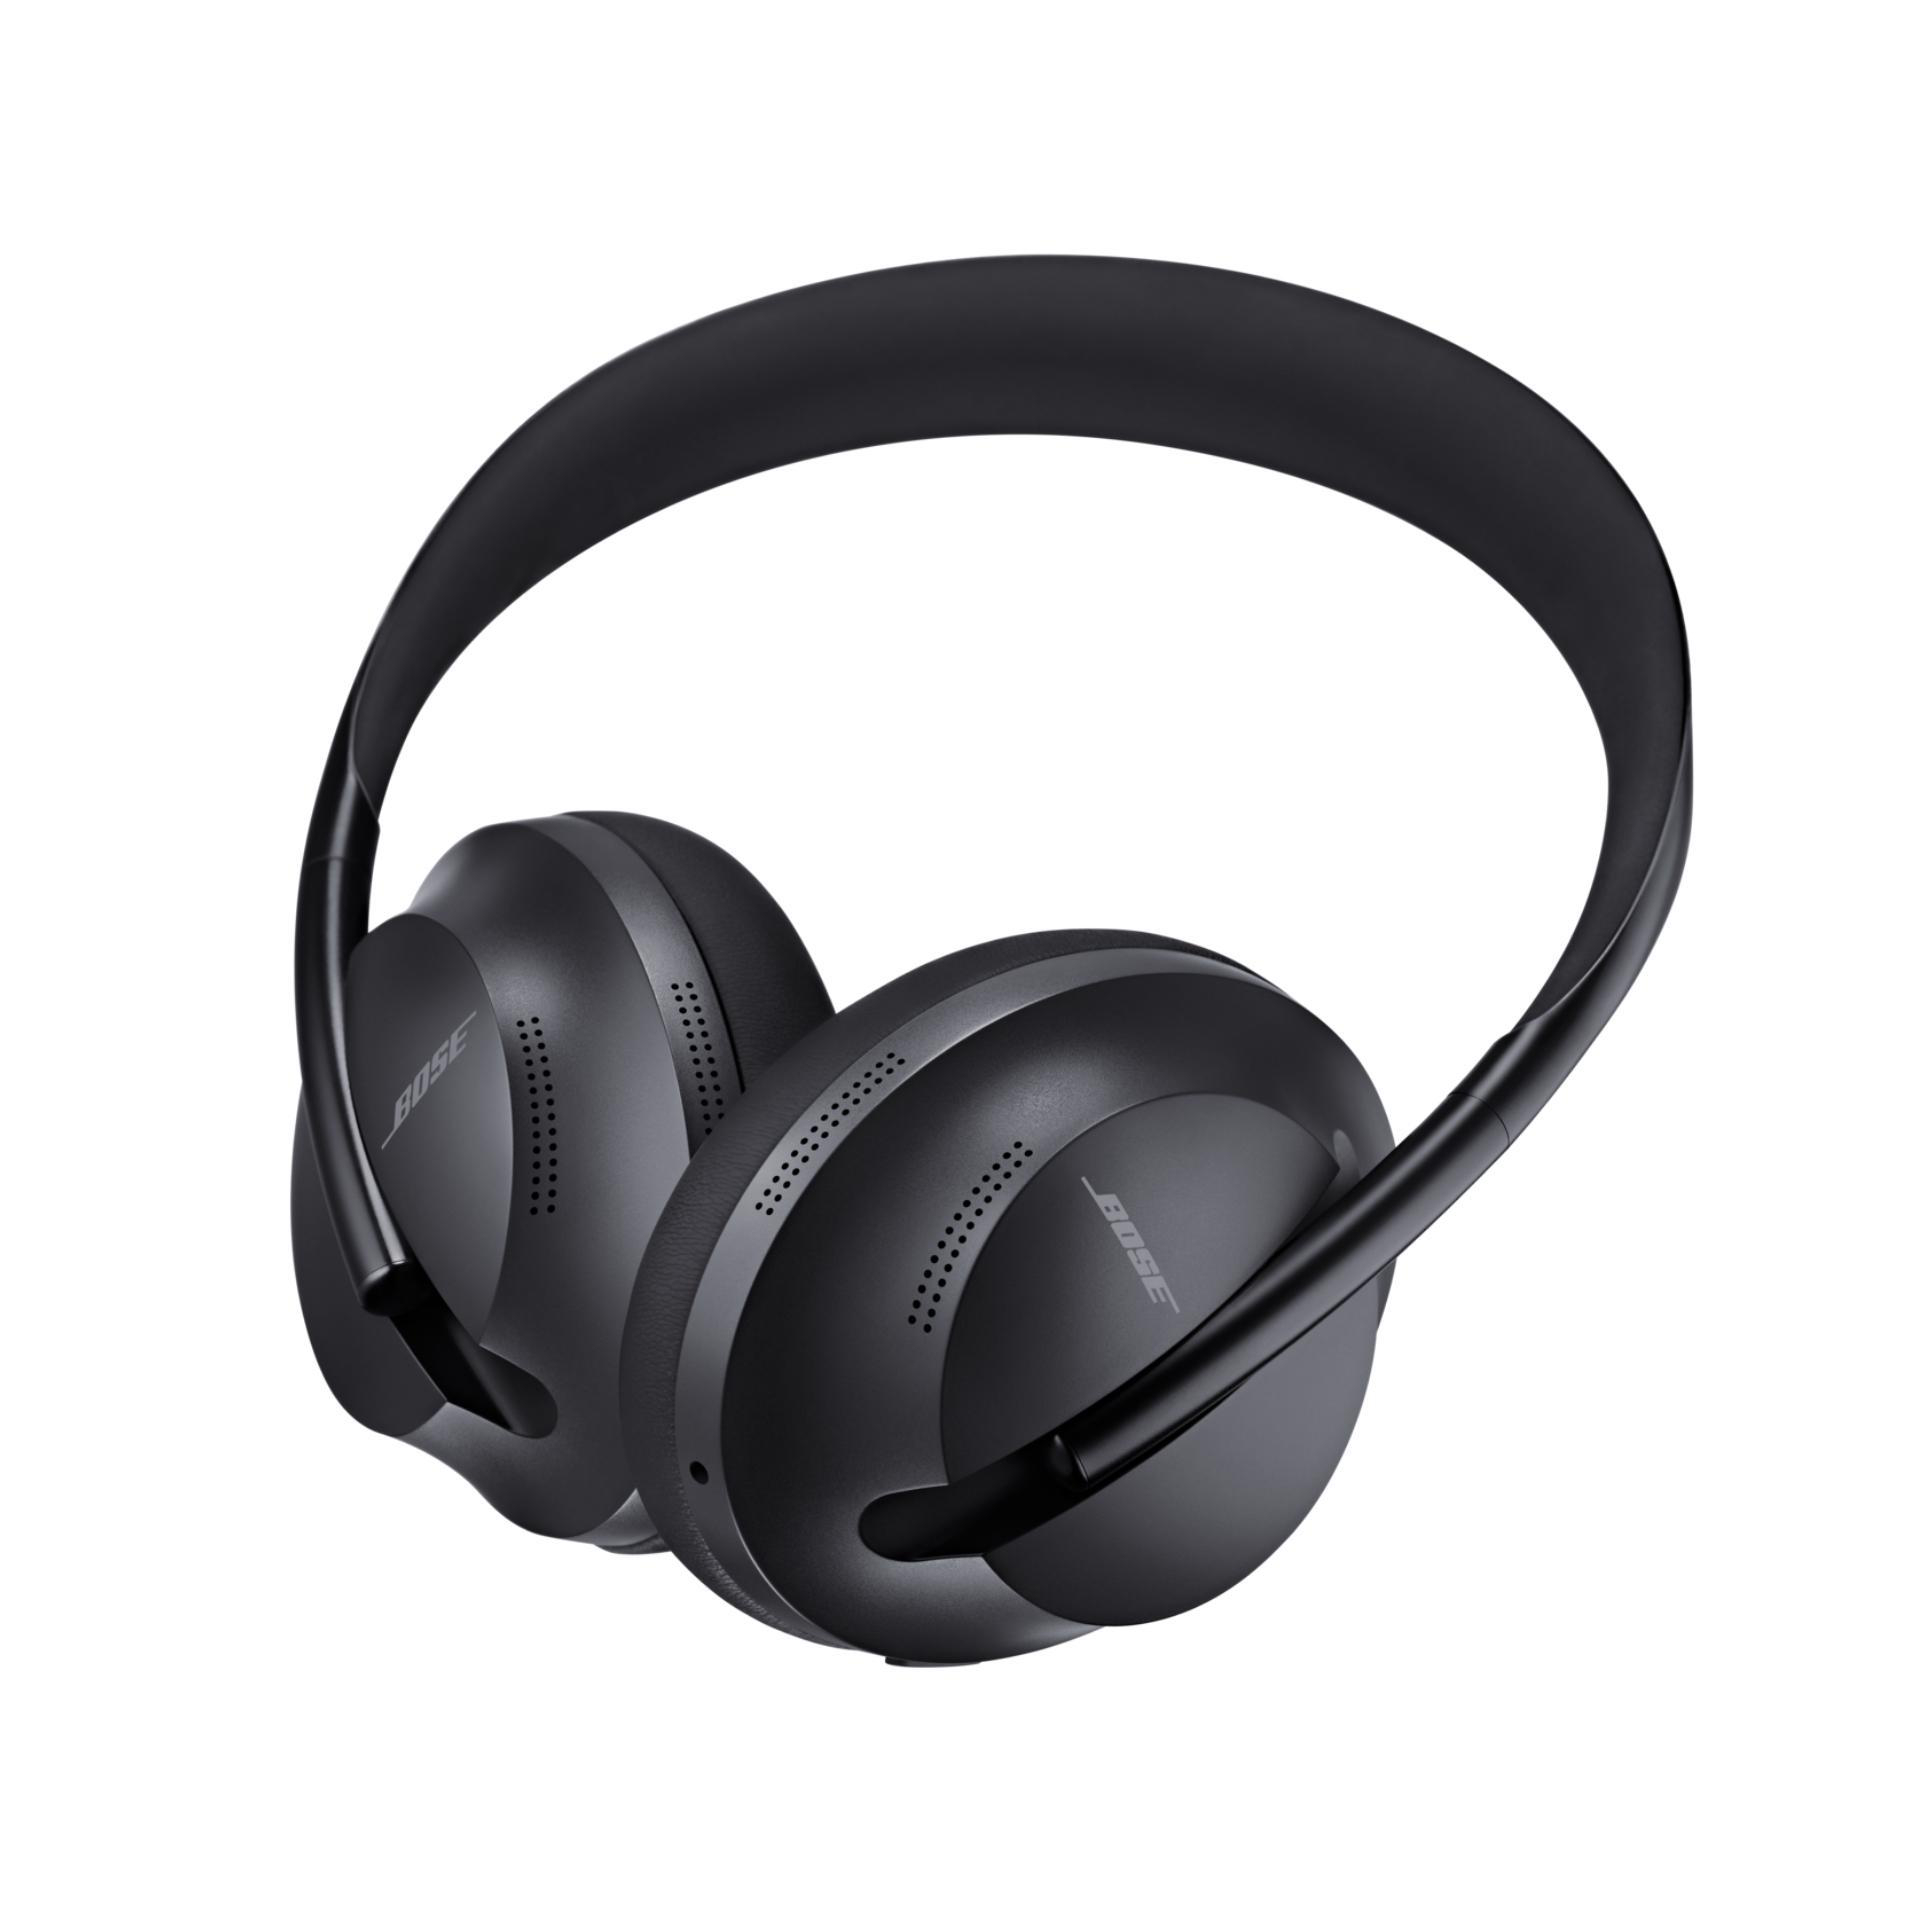 Kopfhörer Over-ear Headphones Schwarz 700 kabellose Bluetooth Noise-Cancelling, BOSE